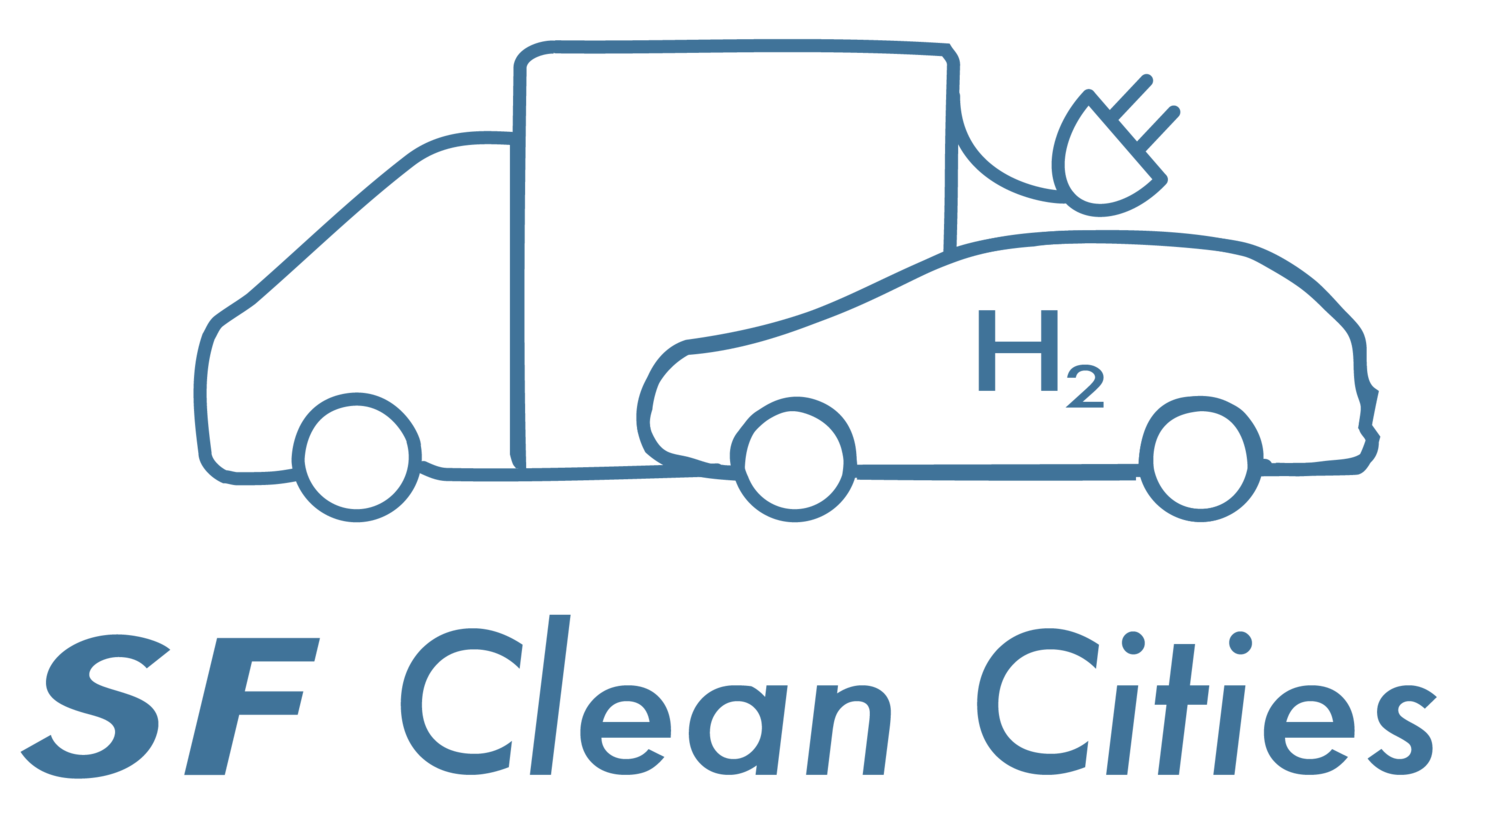 San Francisco Clean Cities Coalition